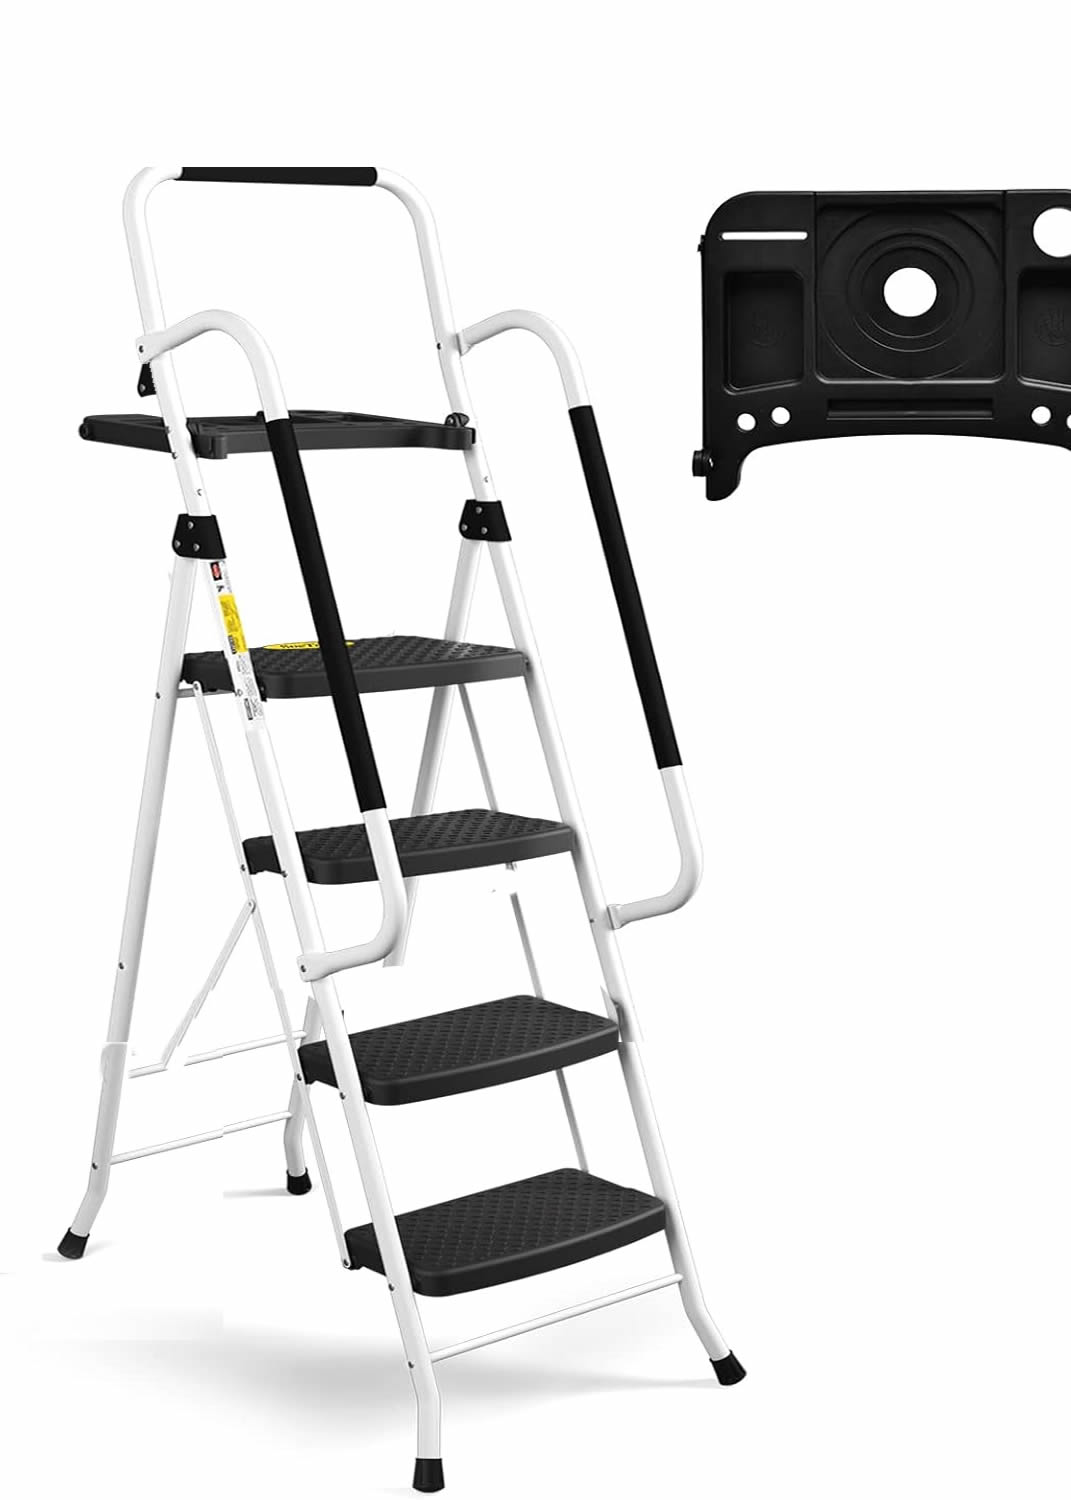 Four-step tray ladder